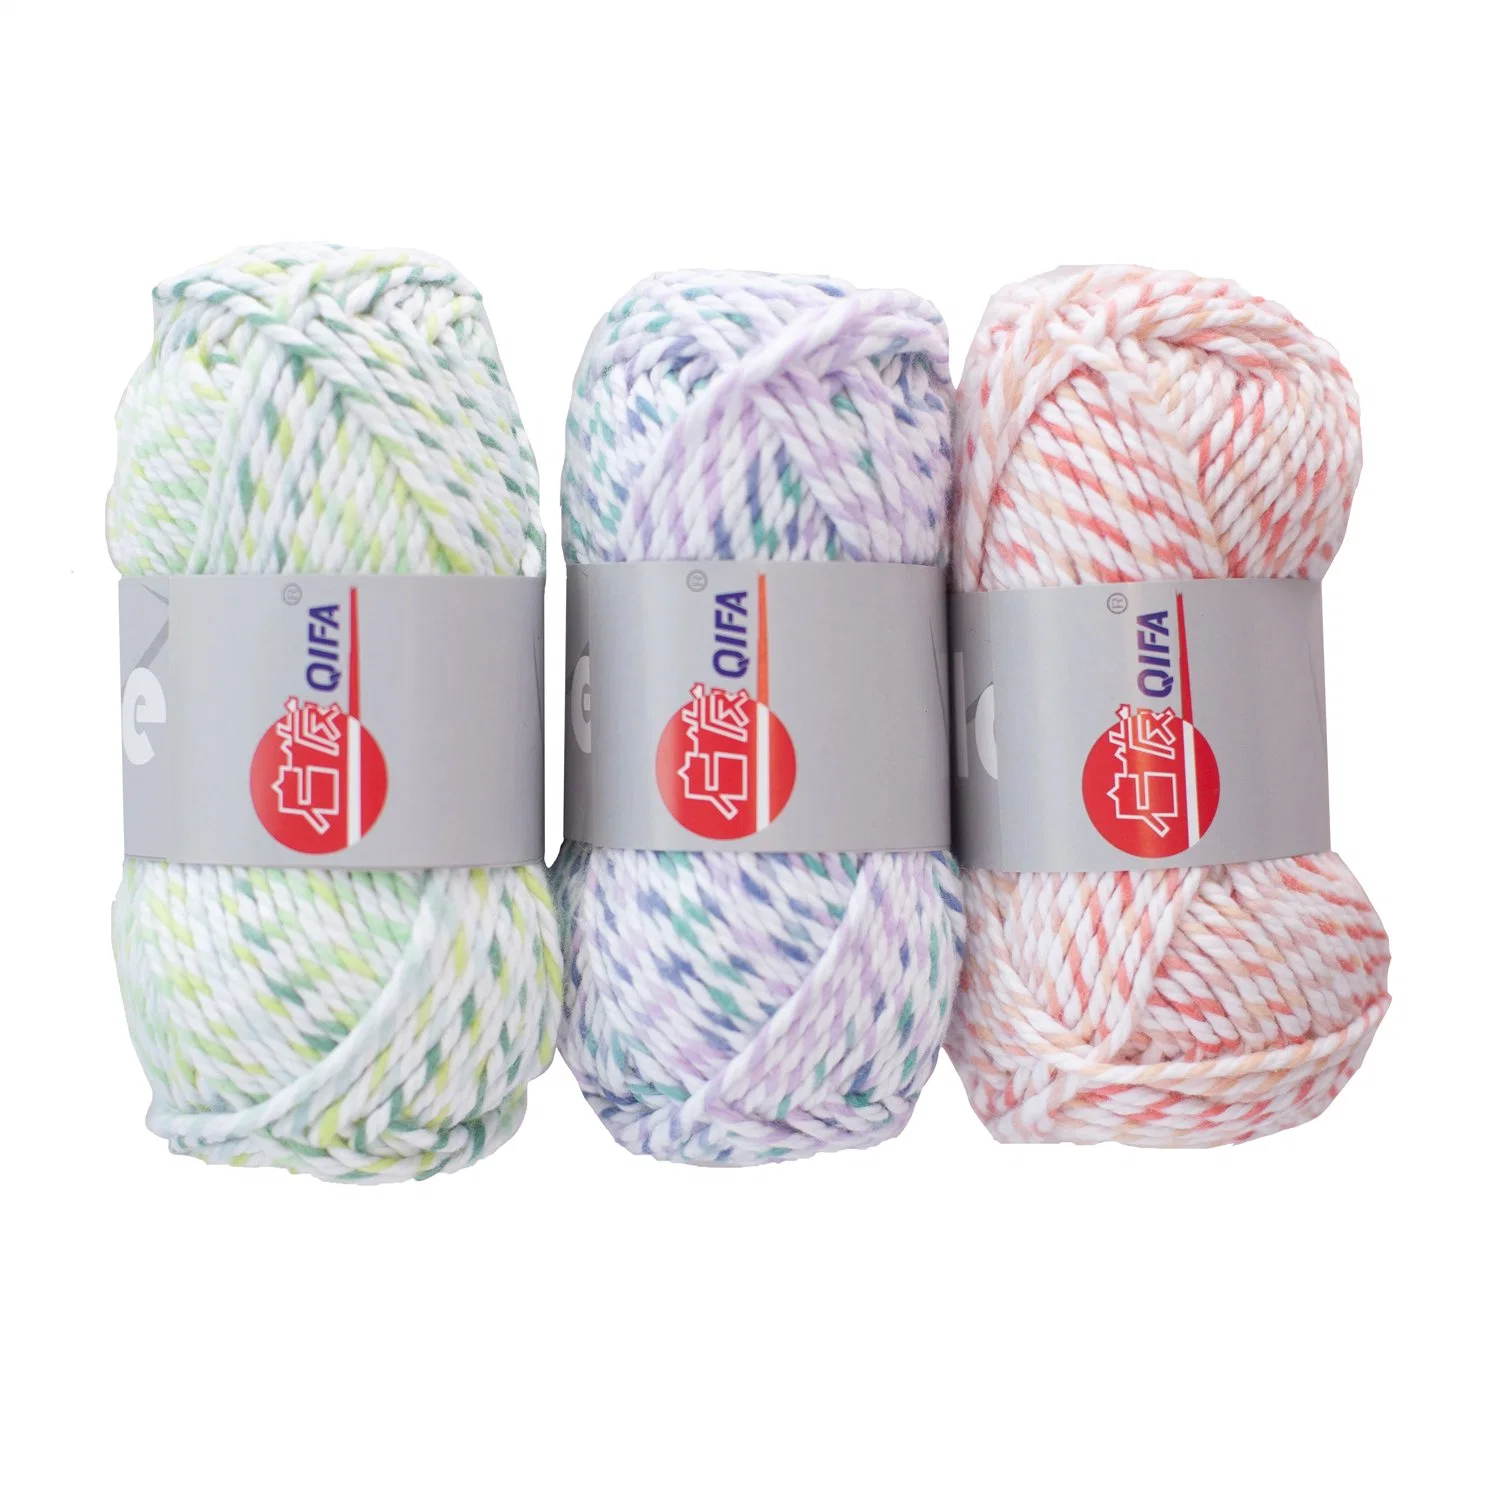 China Factory Customized 100% Wholesale Cotton and Acrylic Blend Hand Knitting Yarn for Hand Knitting/Wool Yarn